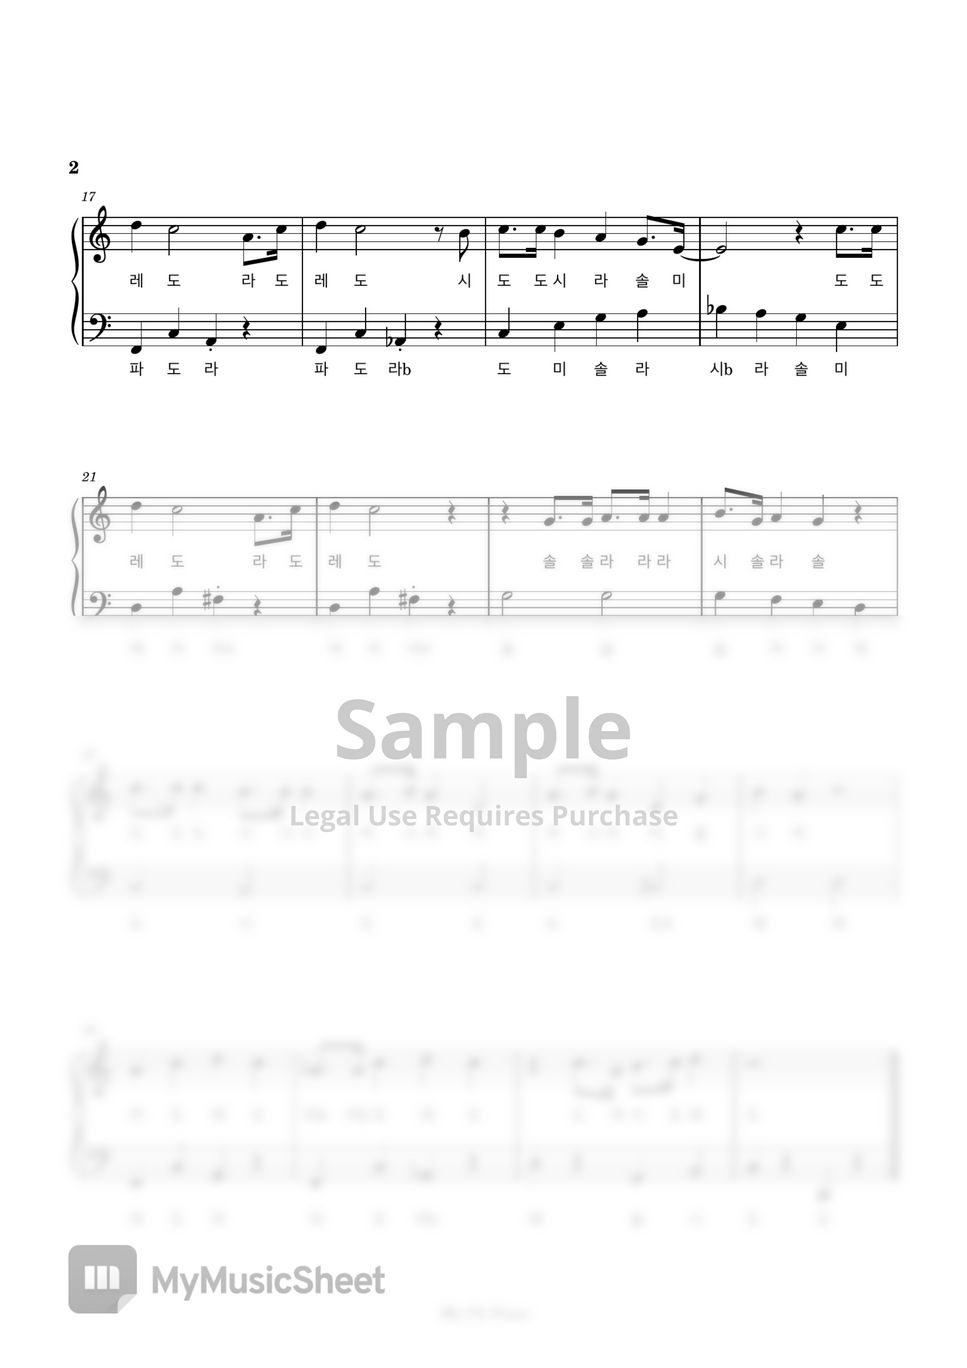 Bobby Helms - Jingle bell rock (쉬운계이름악보,  C Key) by My Uk Piano